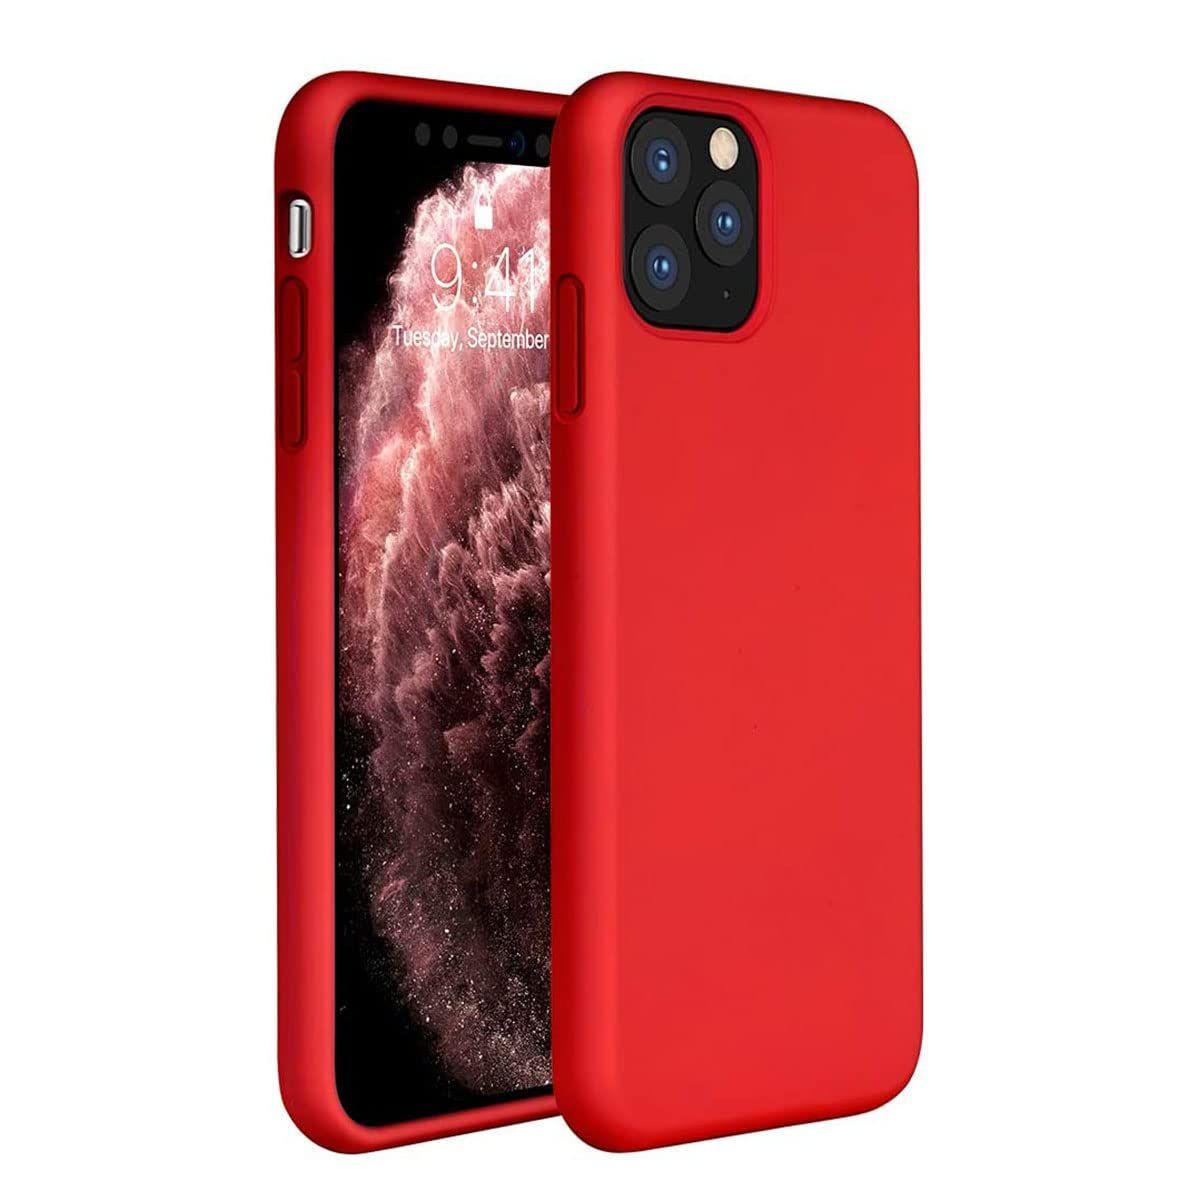 LIRAMARK Liquid Silicone Soft Back Cover Case for Apple iPhone 11 Pro (Red)